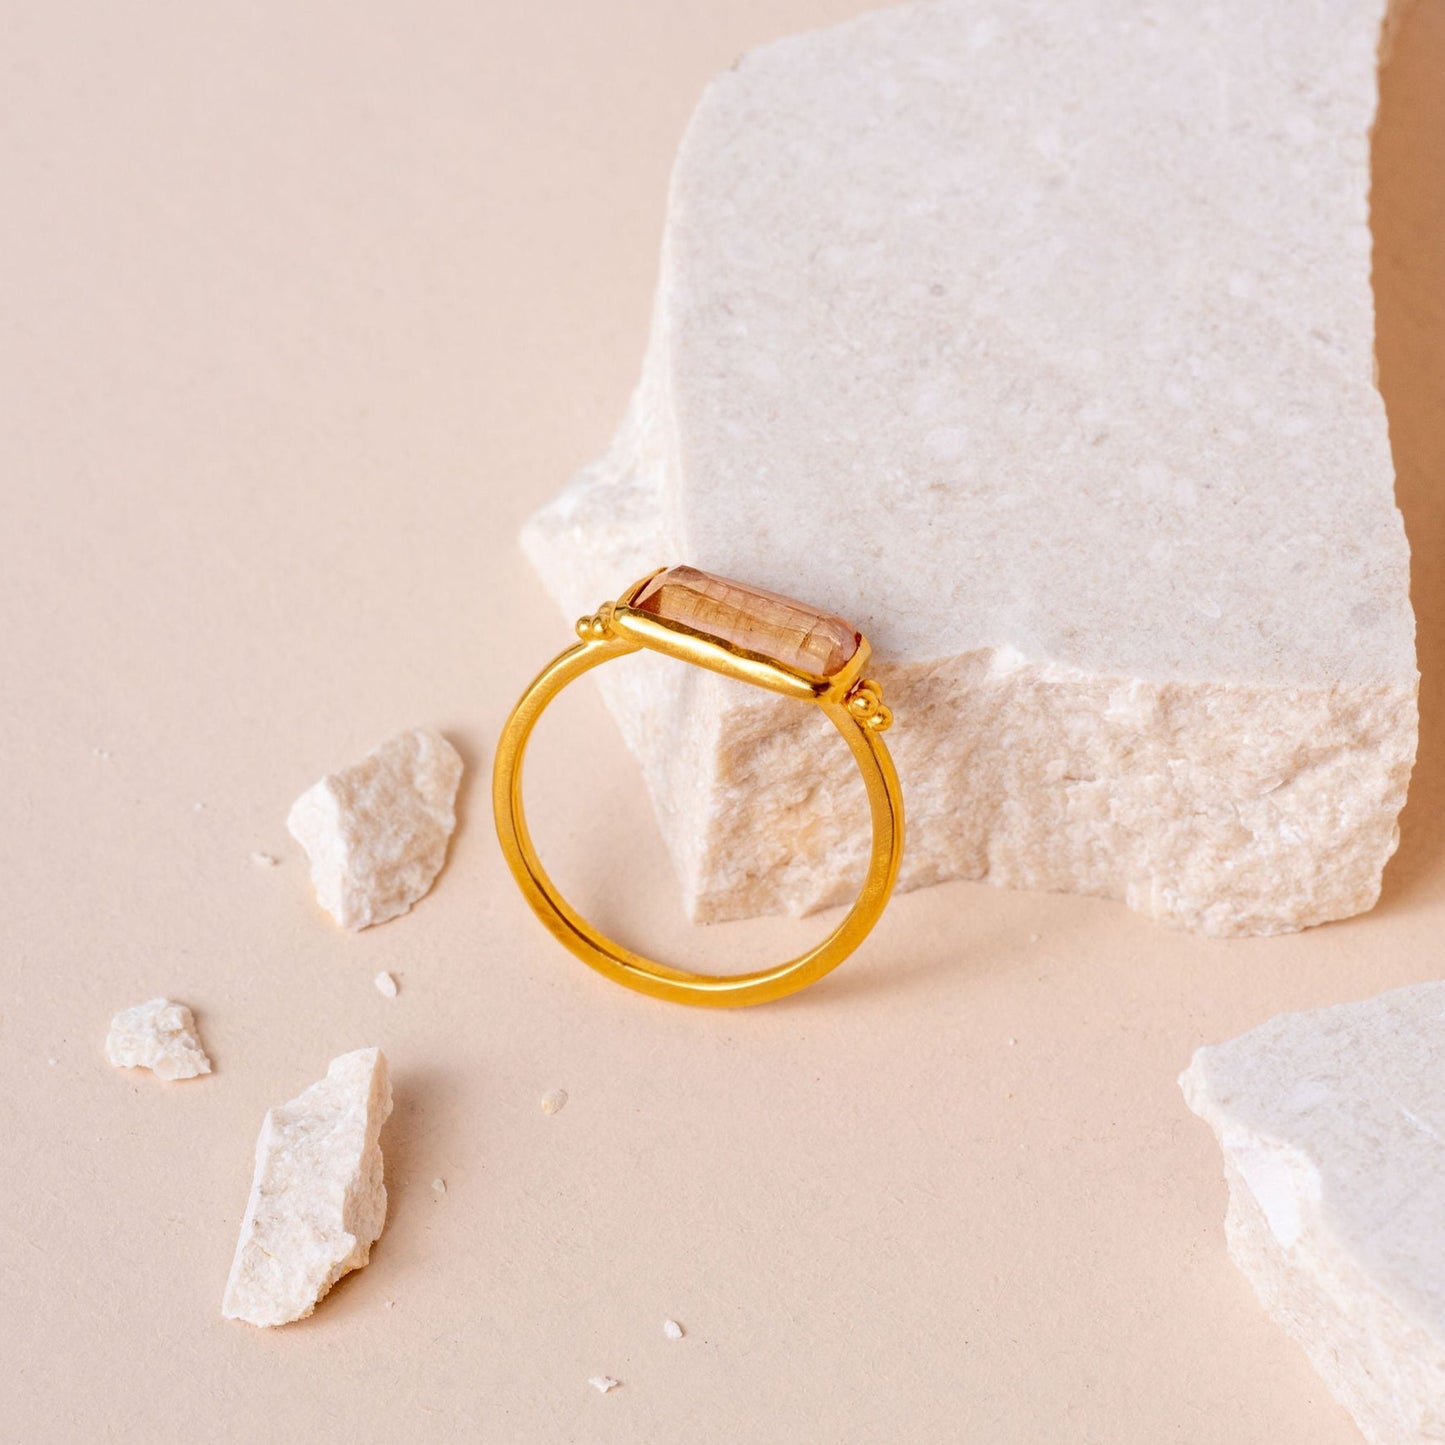 Exquisite gold ring showcasing a hand-cut rectangular tourmaline.